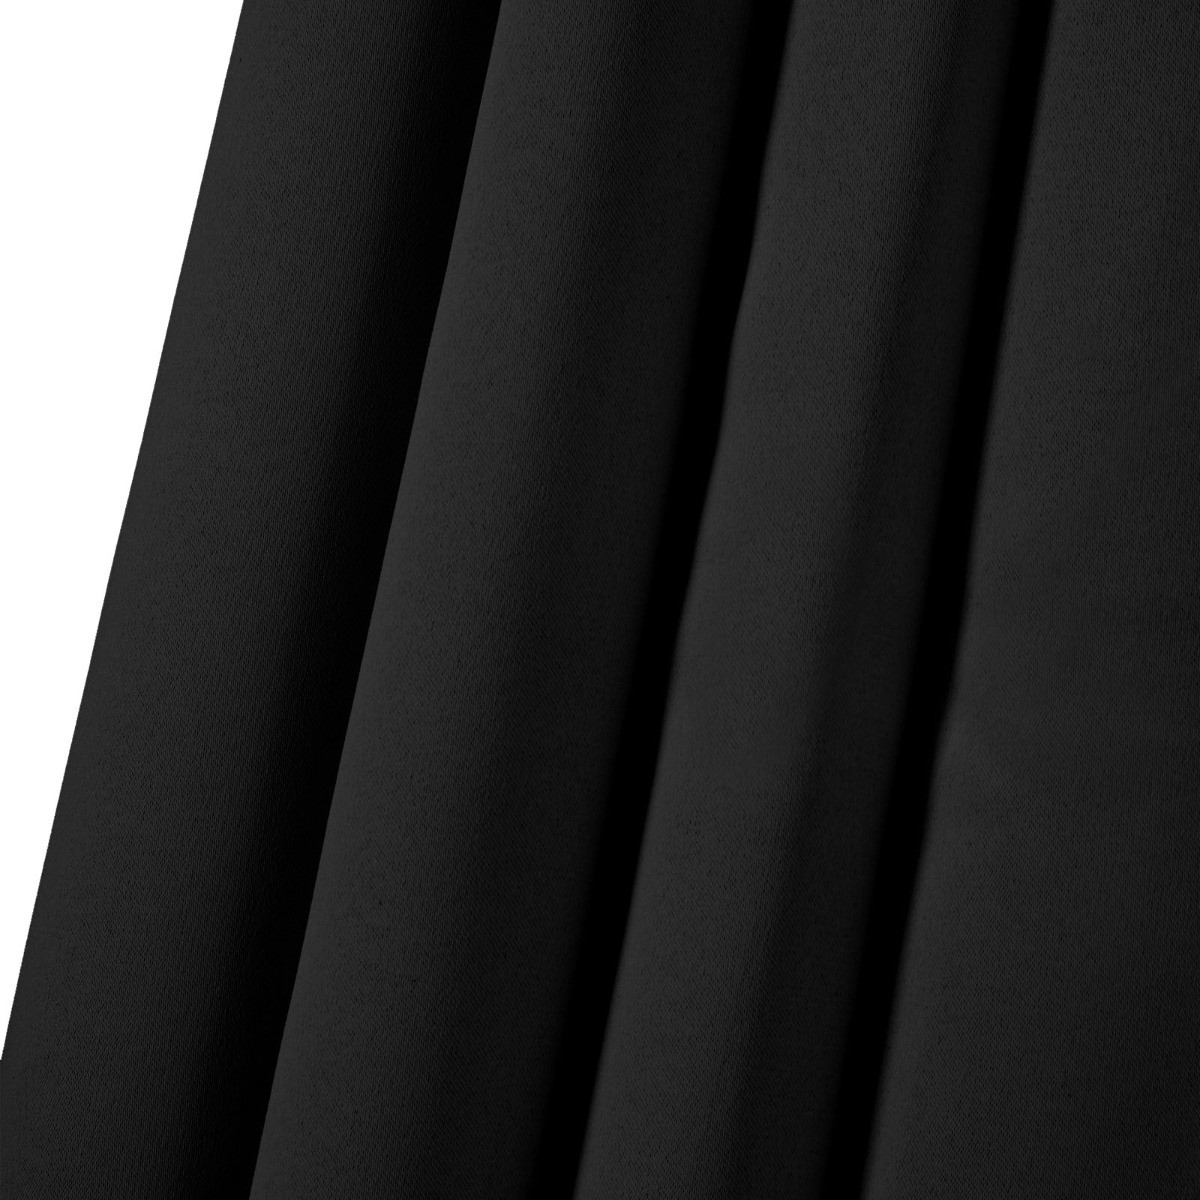 Dreamscene Eyelet Blackout Curtains - Black, 66" X 90">